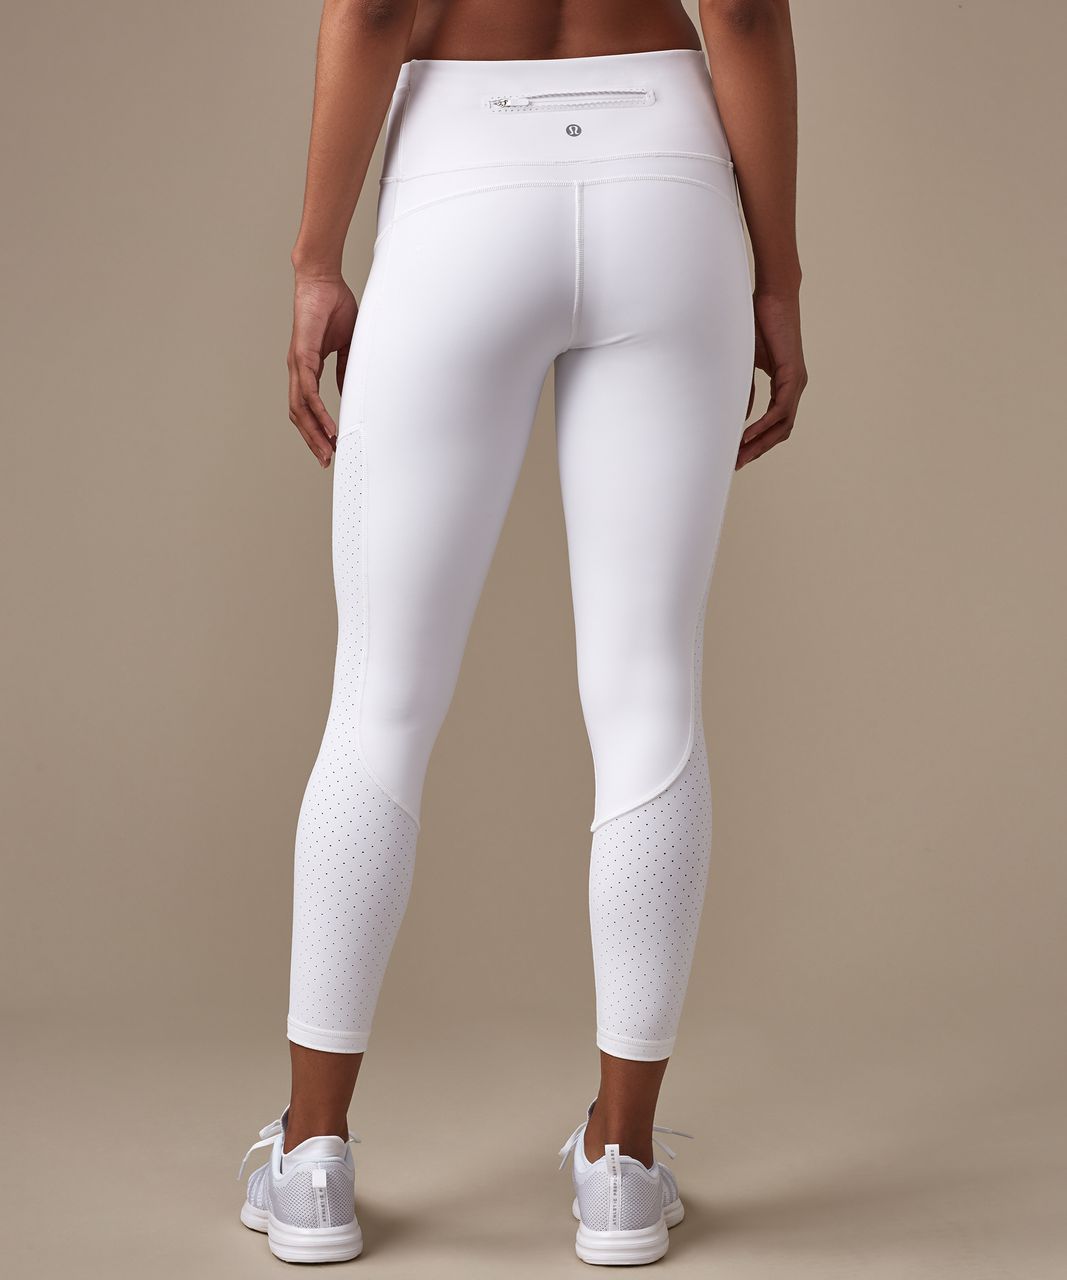 Lululemon mind over miles white leggings Size 4 - $47 - From AnnaLee